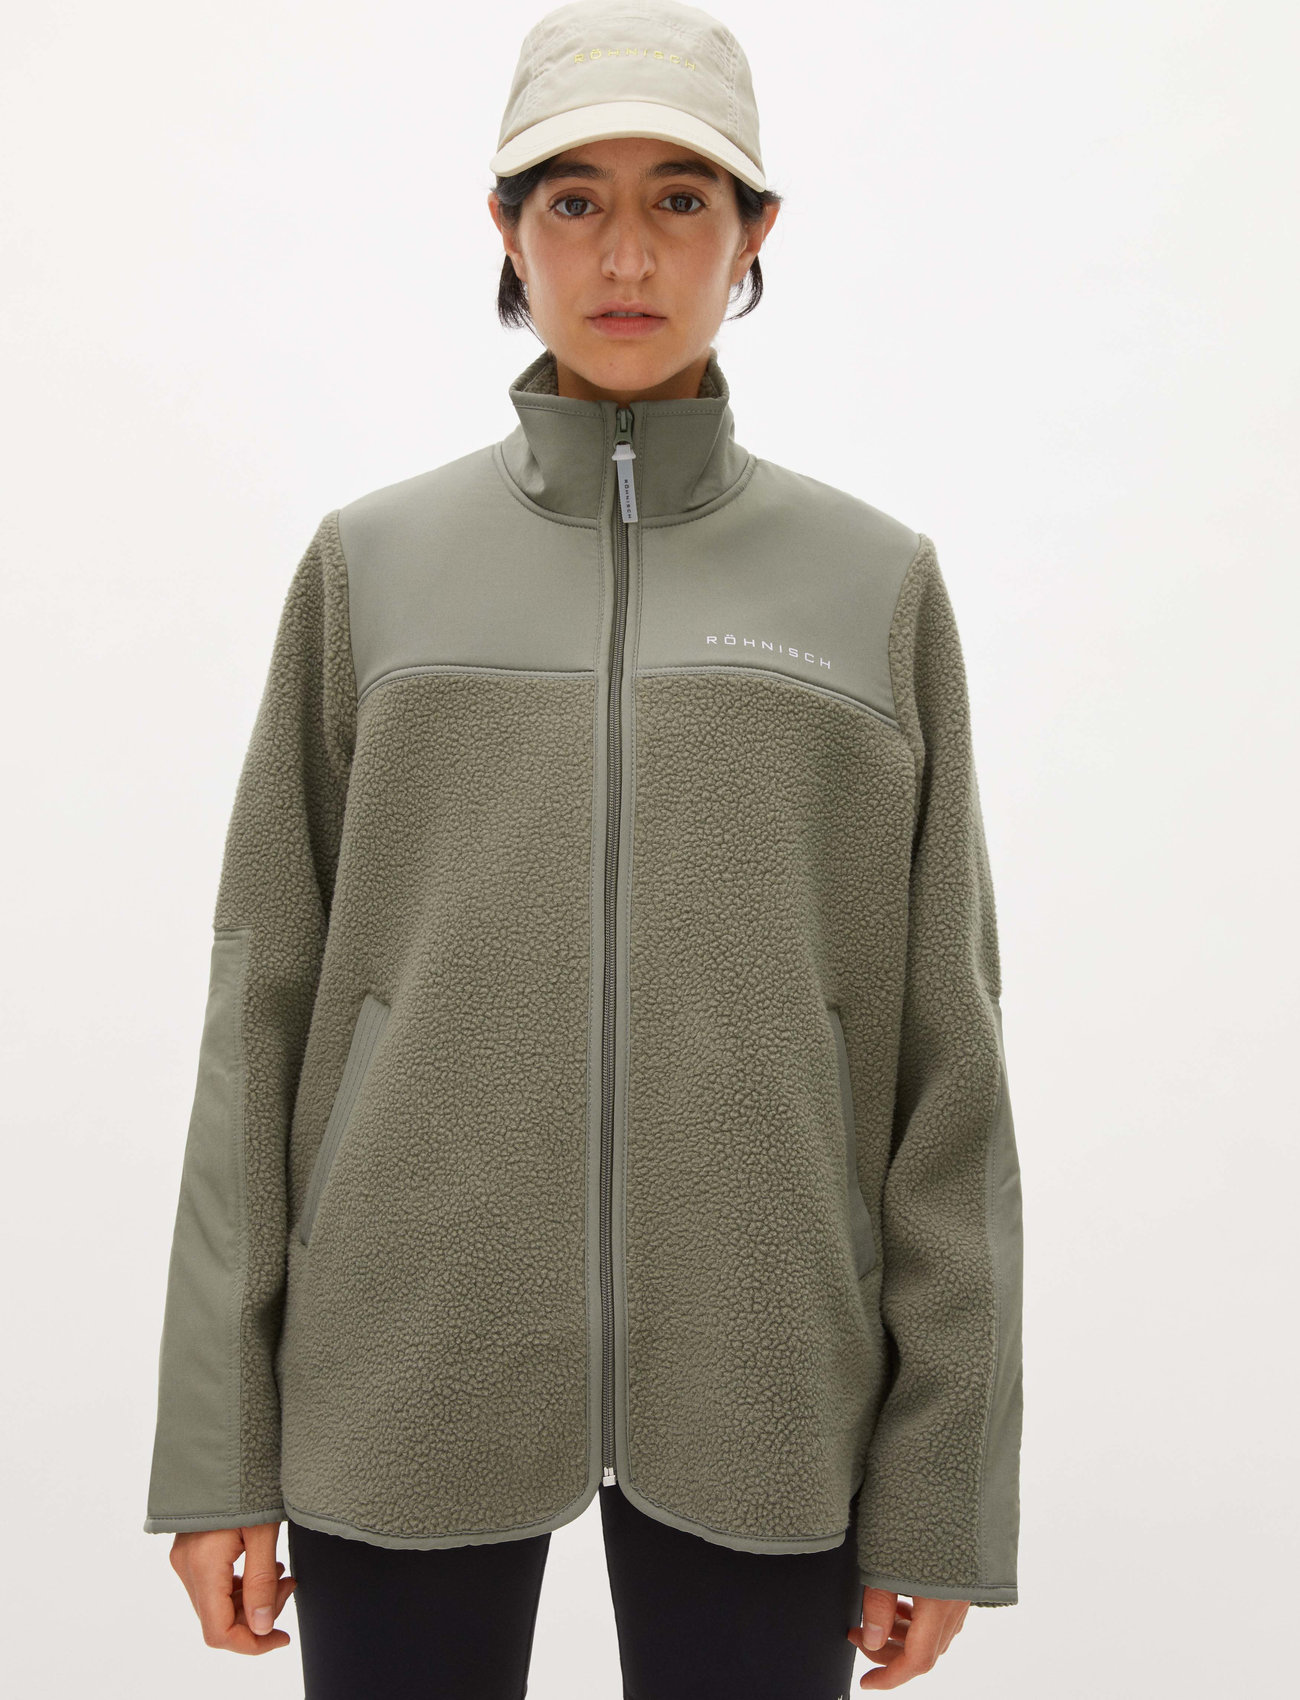 Röhnisch - Phoebe Pile Jacket - mid layer jackets - vetiver green - 1